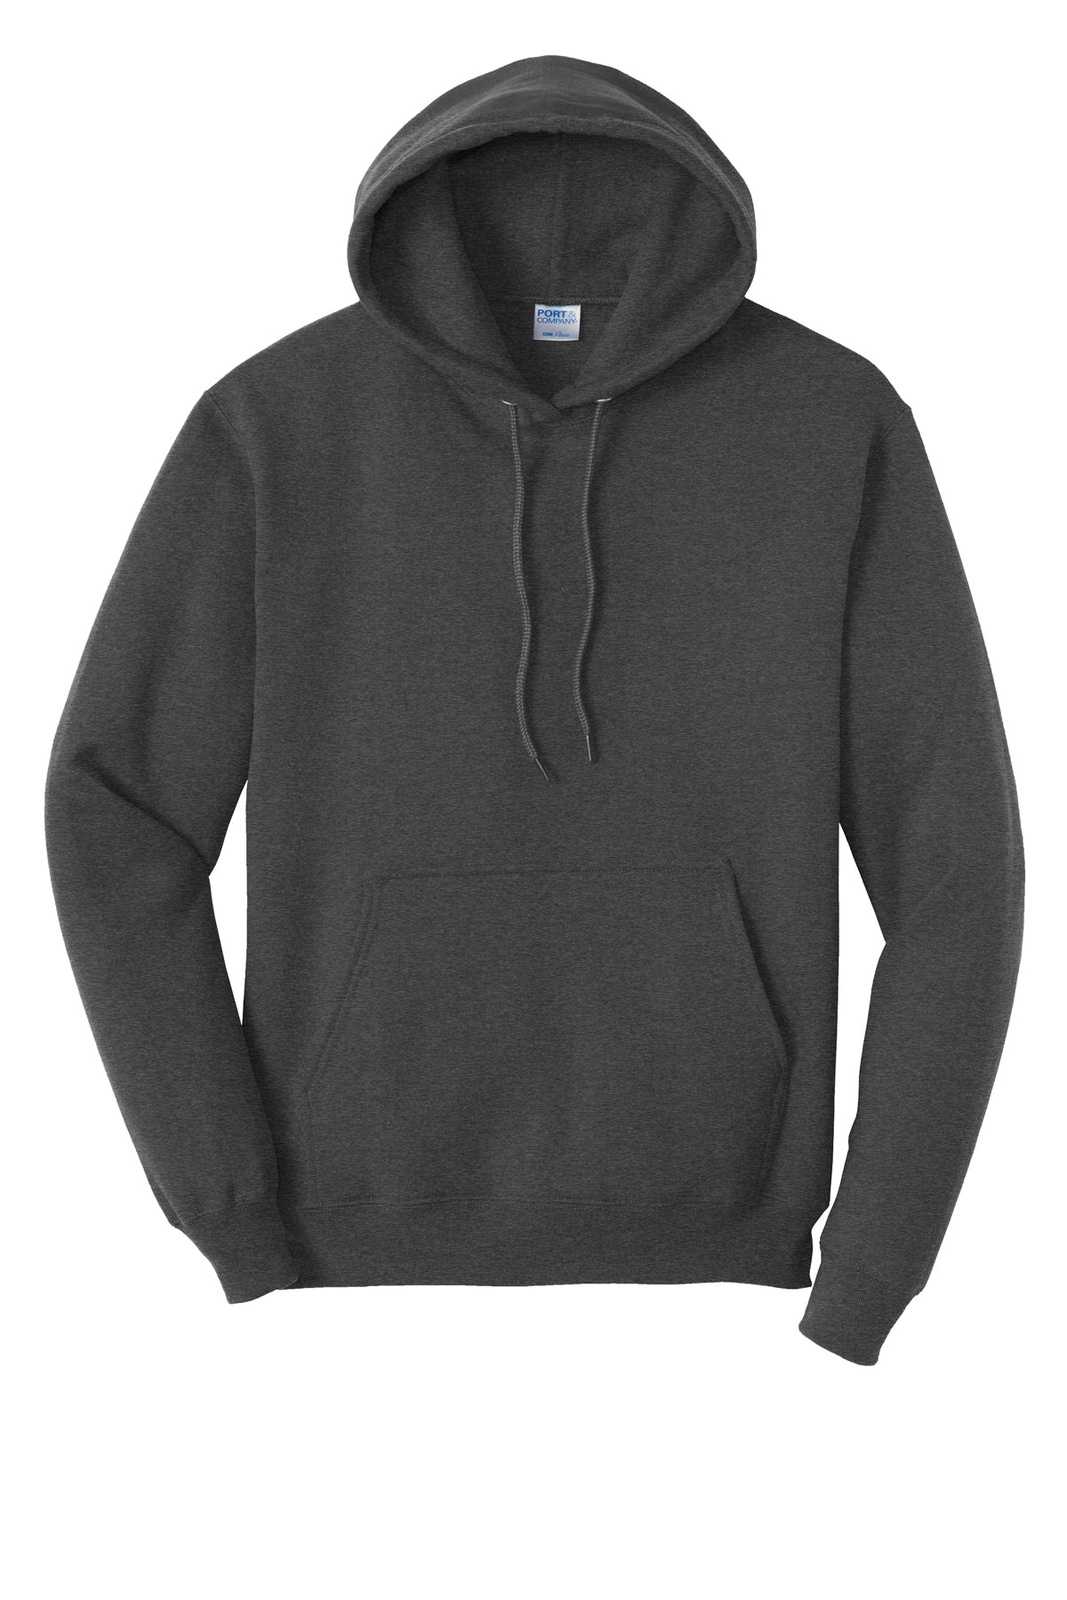 Port & Company PC79H Fleece Pullover Hooded Sweatshirt - Dark Heather Gray - HIT a Double - 1